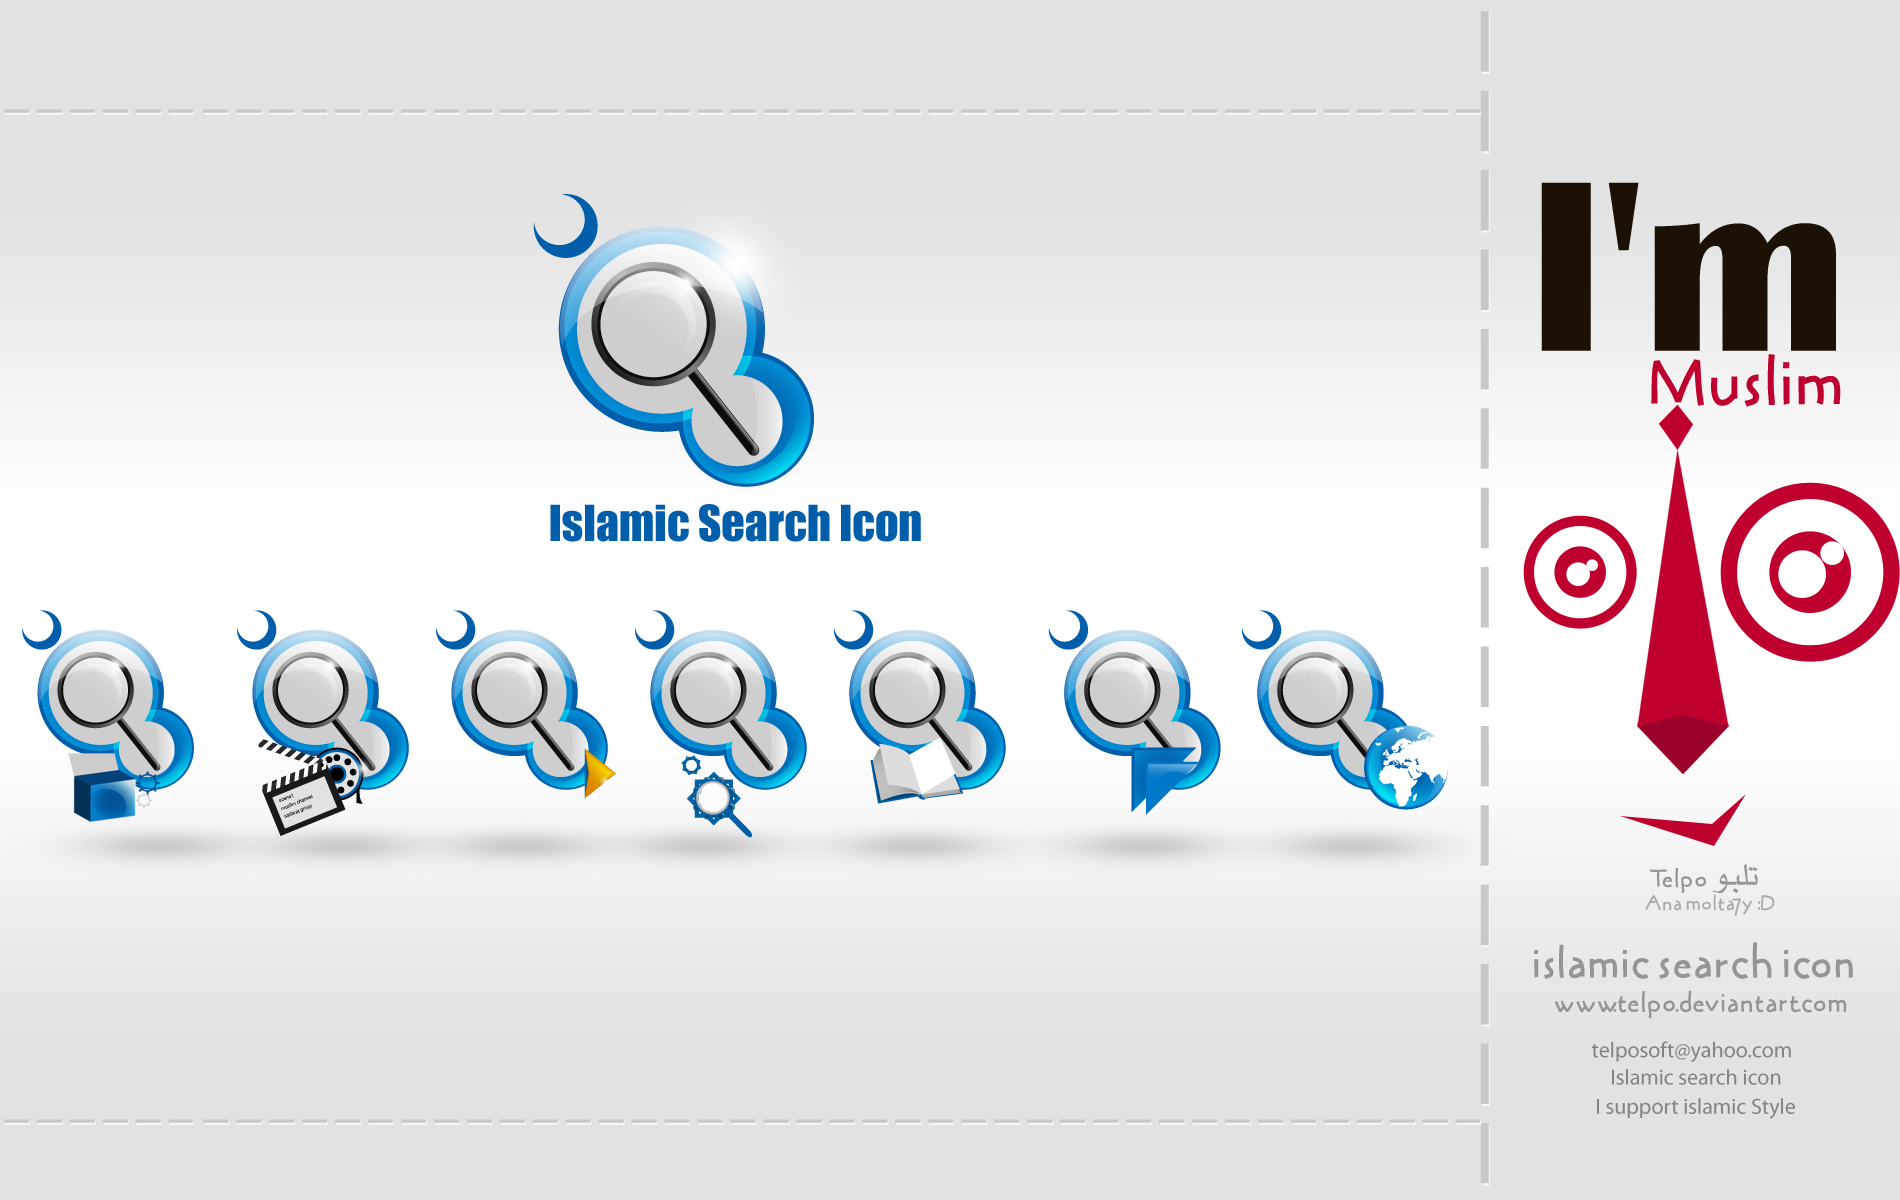 Islamic Search Icon